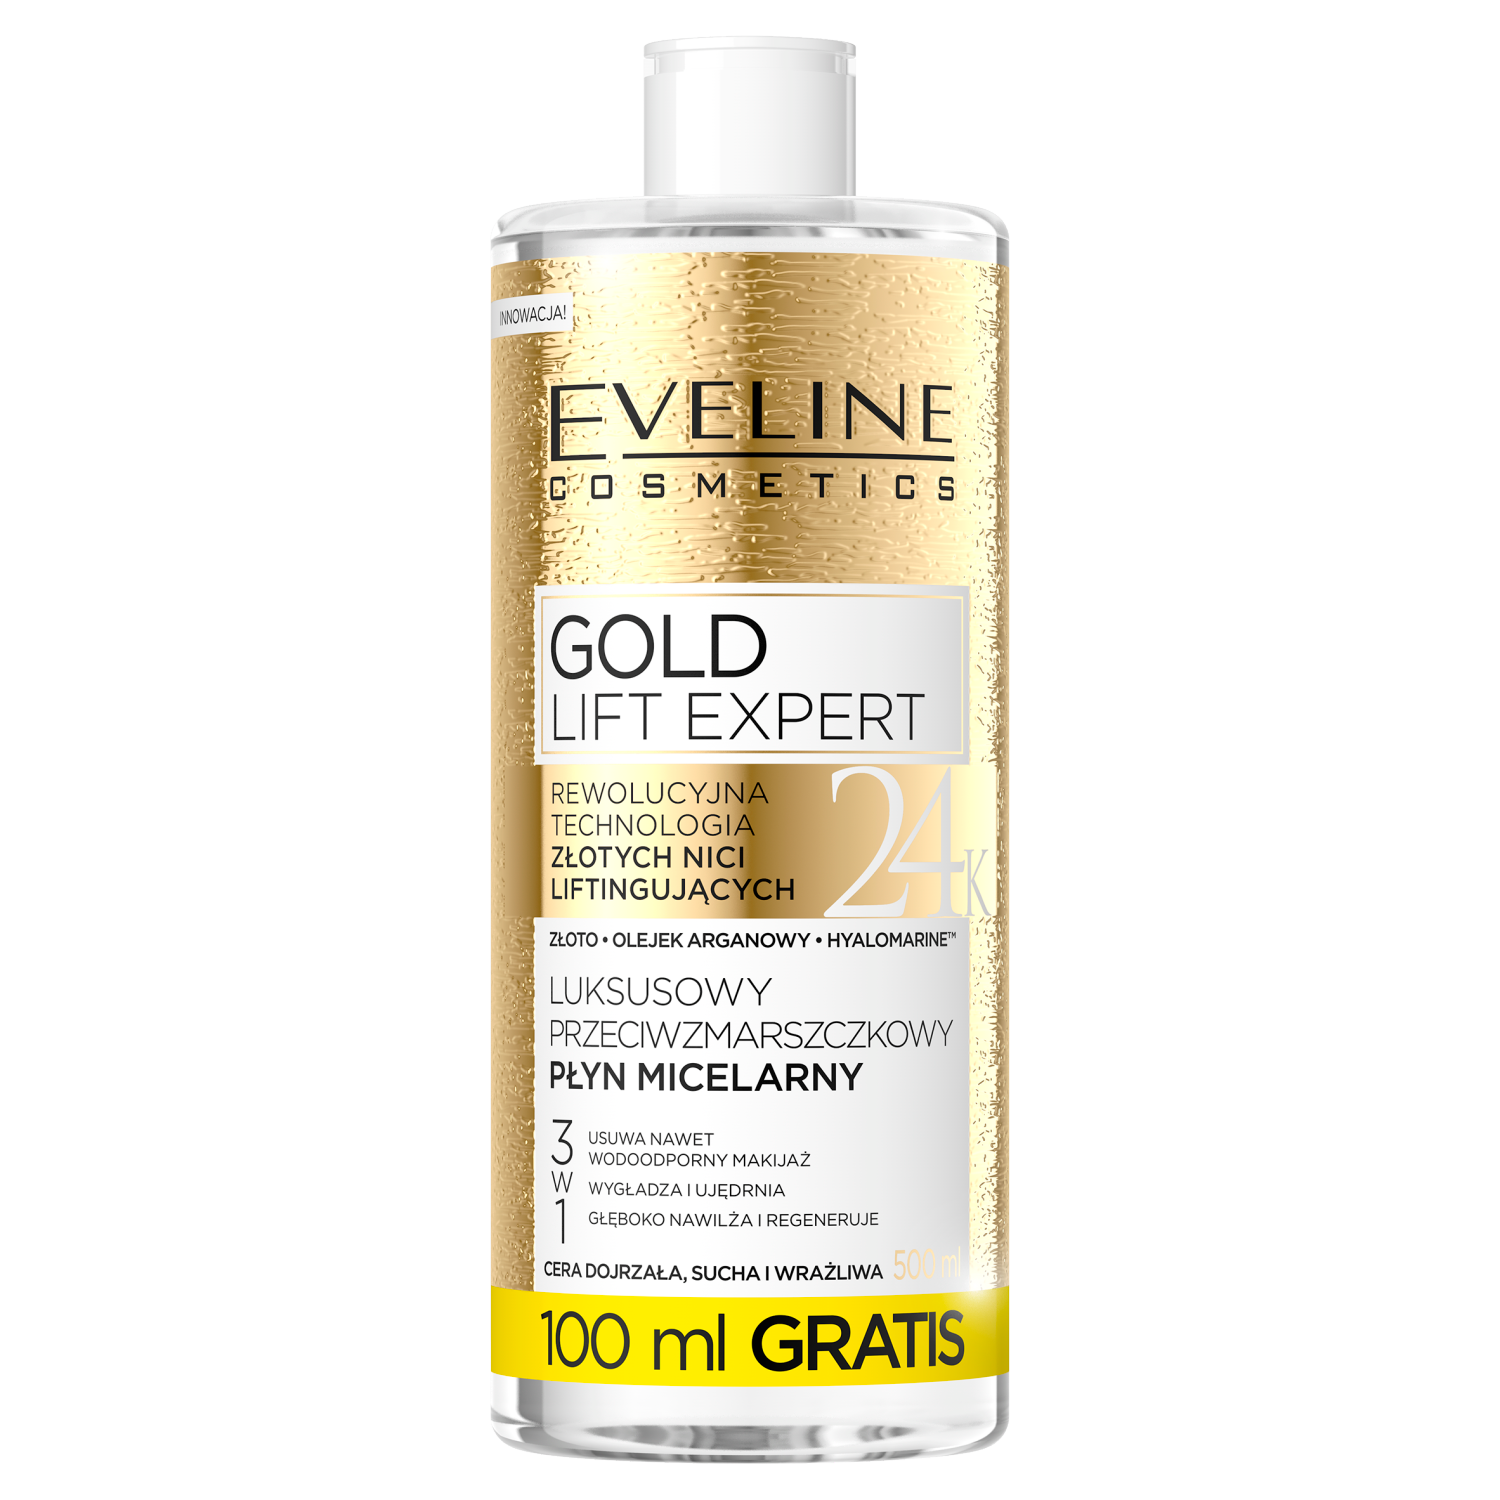 Eveline Cosmetics Gold Lift Expert Мицеллярная вода для лица против морщин, 500 мл